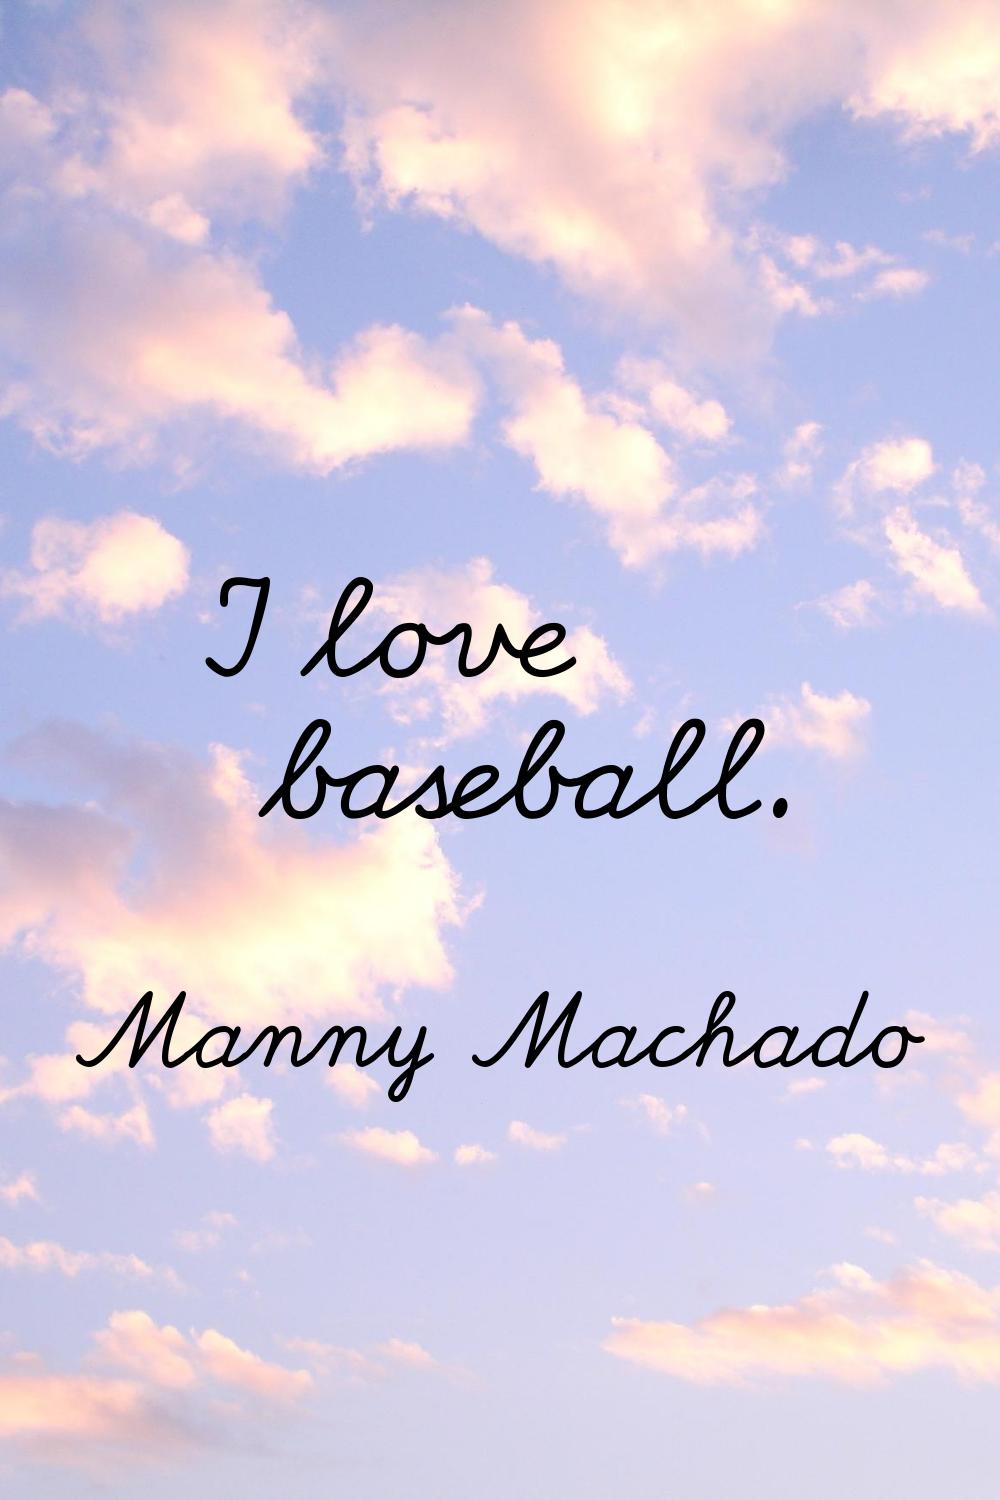 I love baseball.